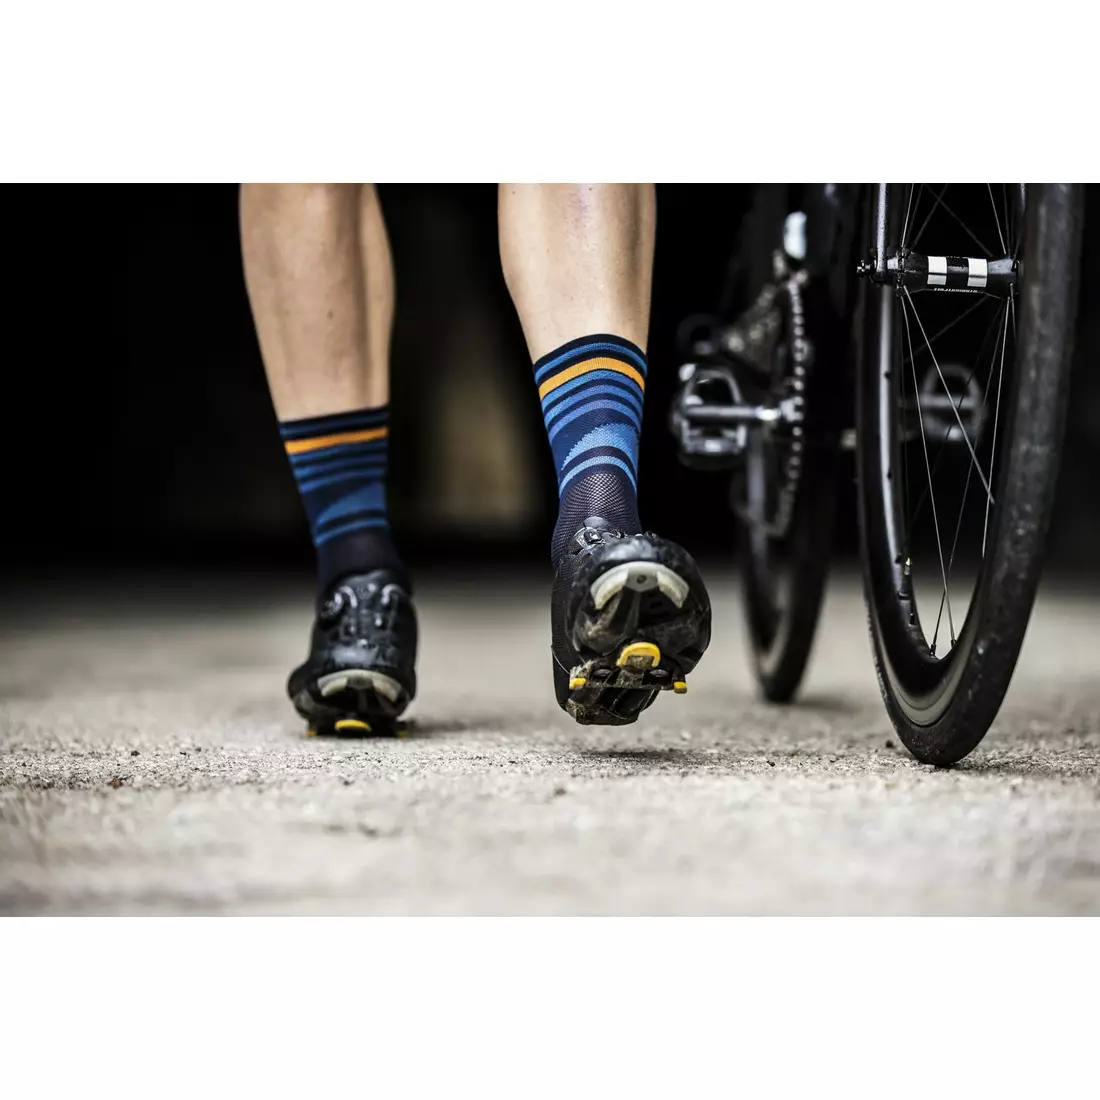 ROGELLI pánske cyklistické ponožky STRIPE Oranžová